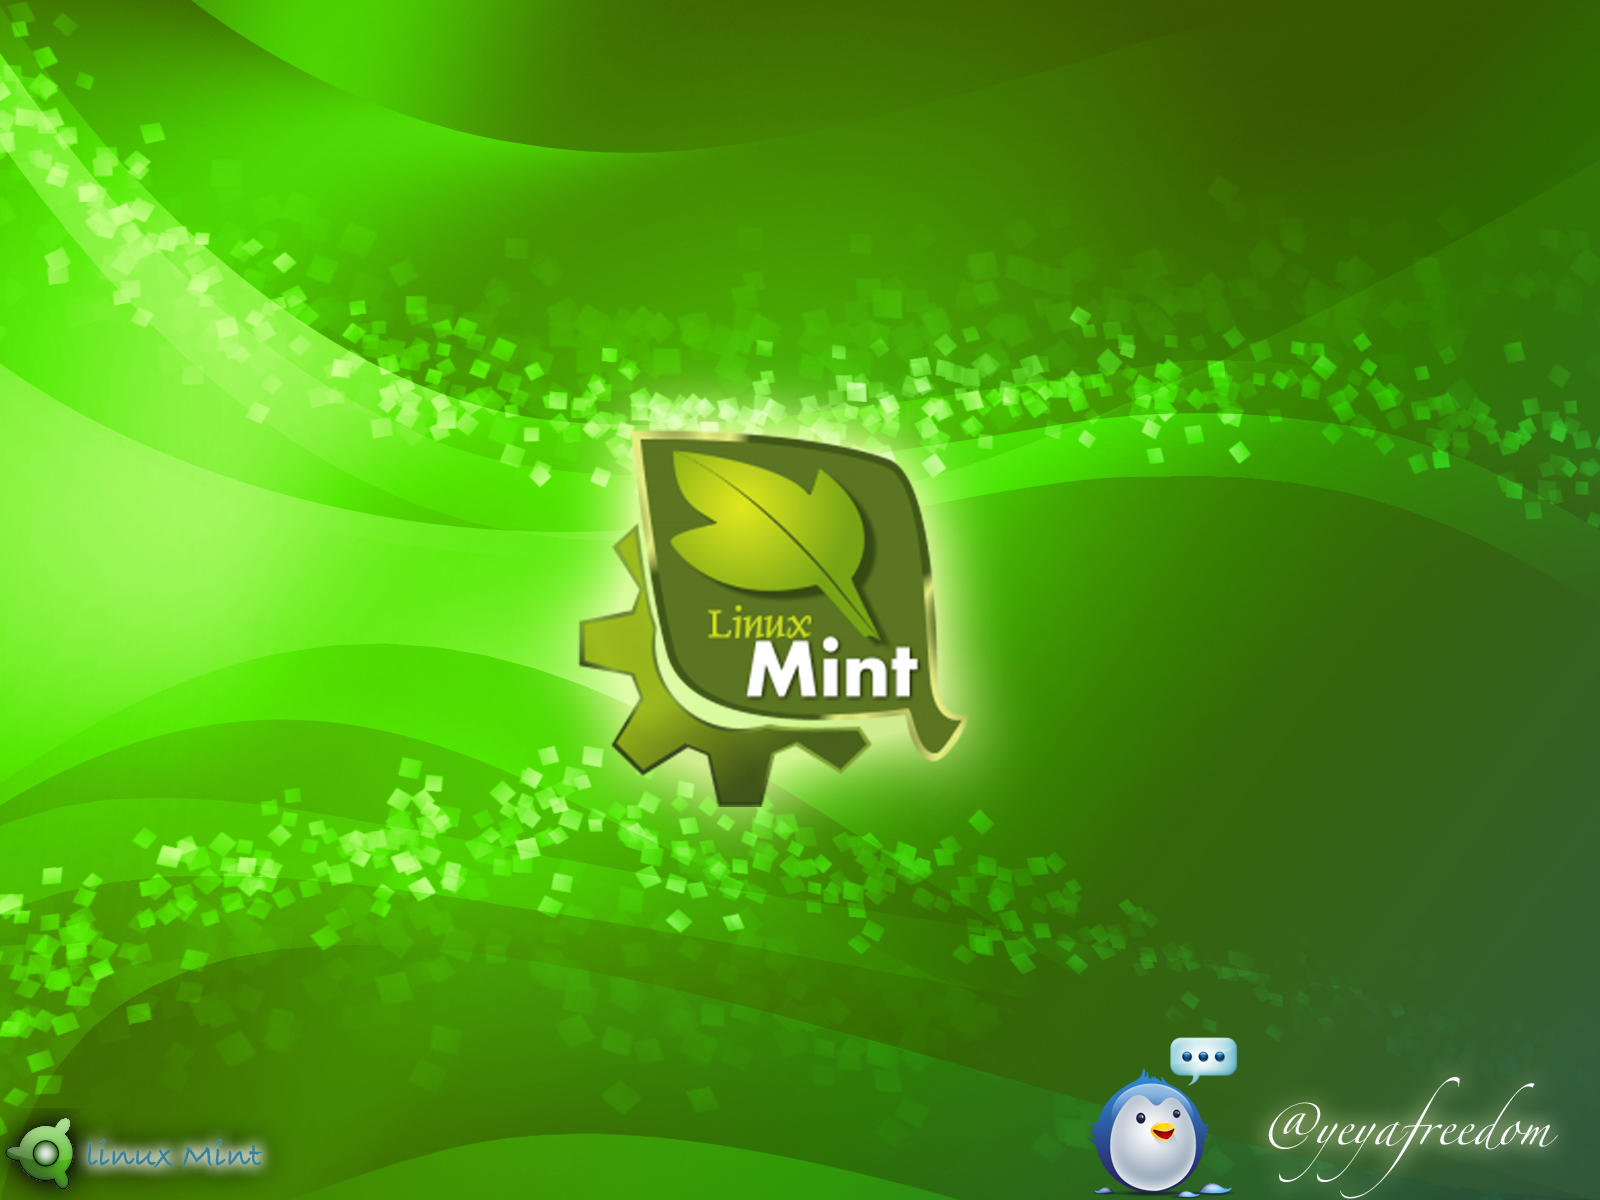 wallpaper linux mint,green,font,screenshot,games,illustration